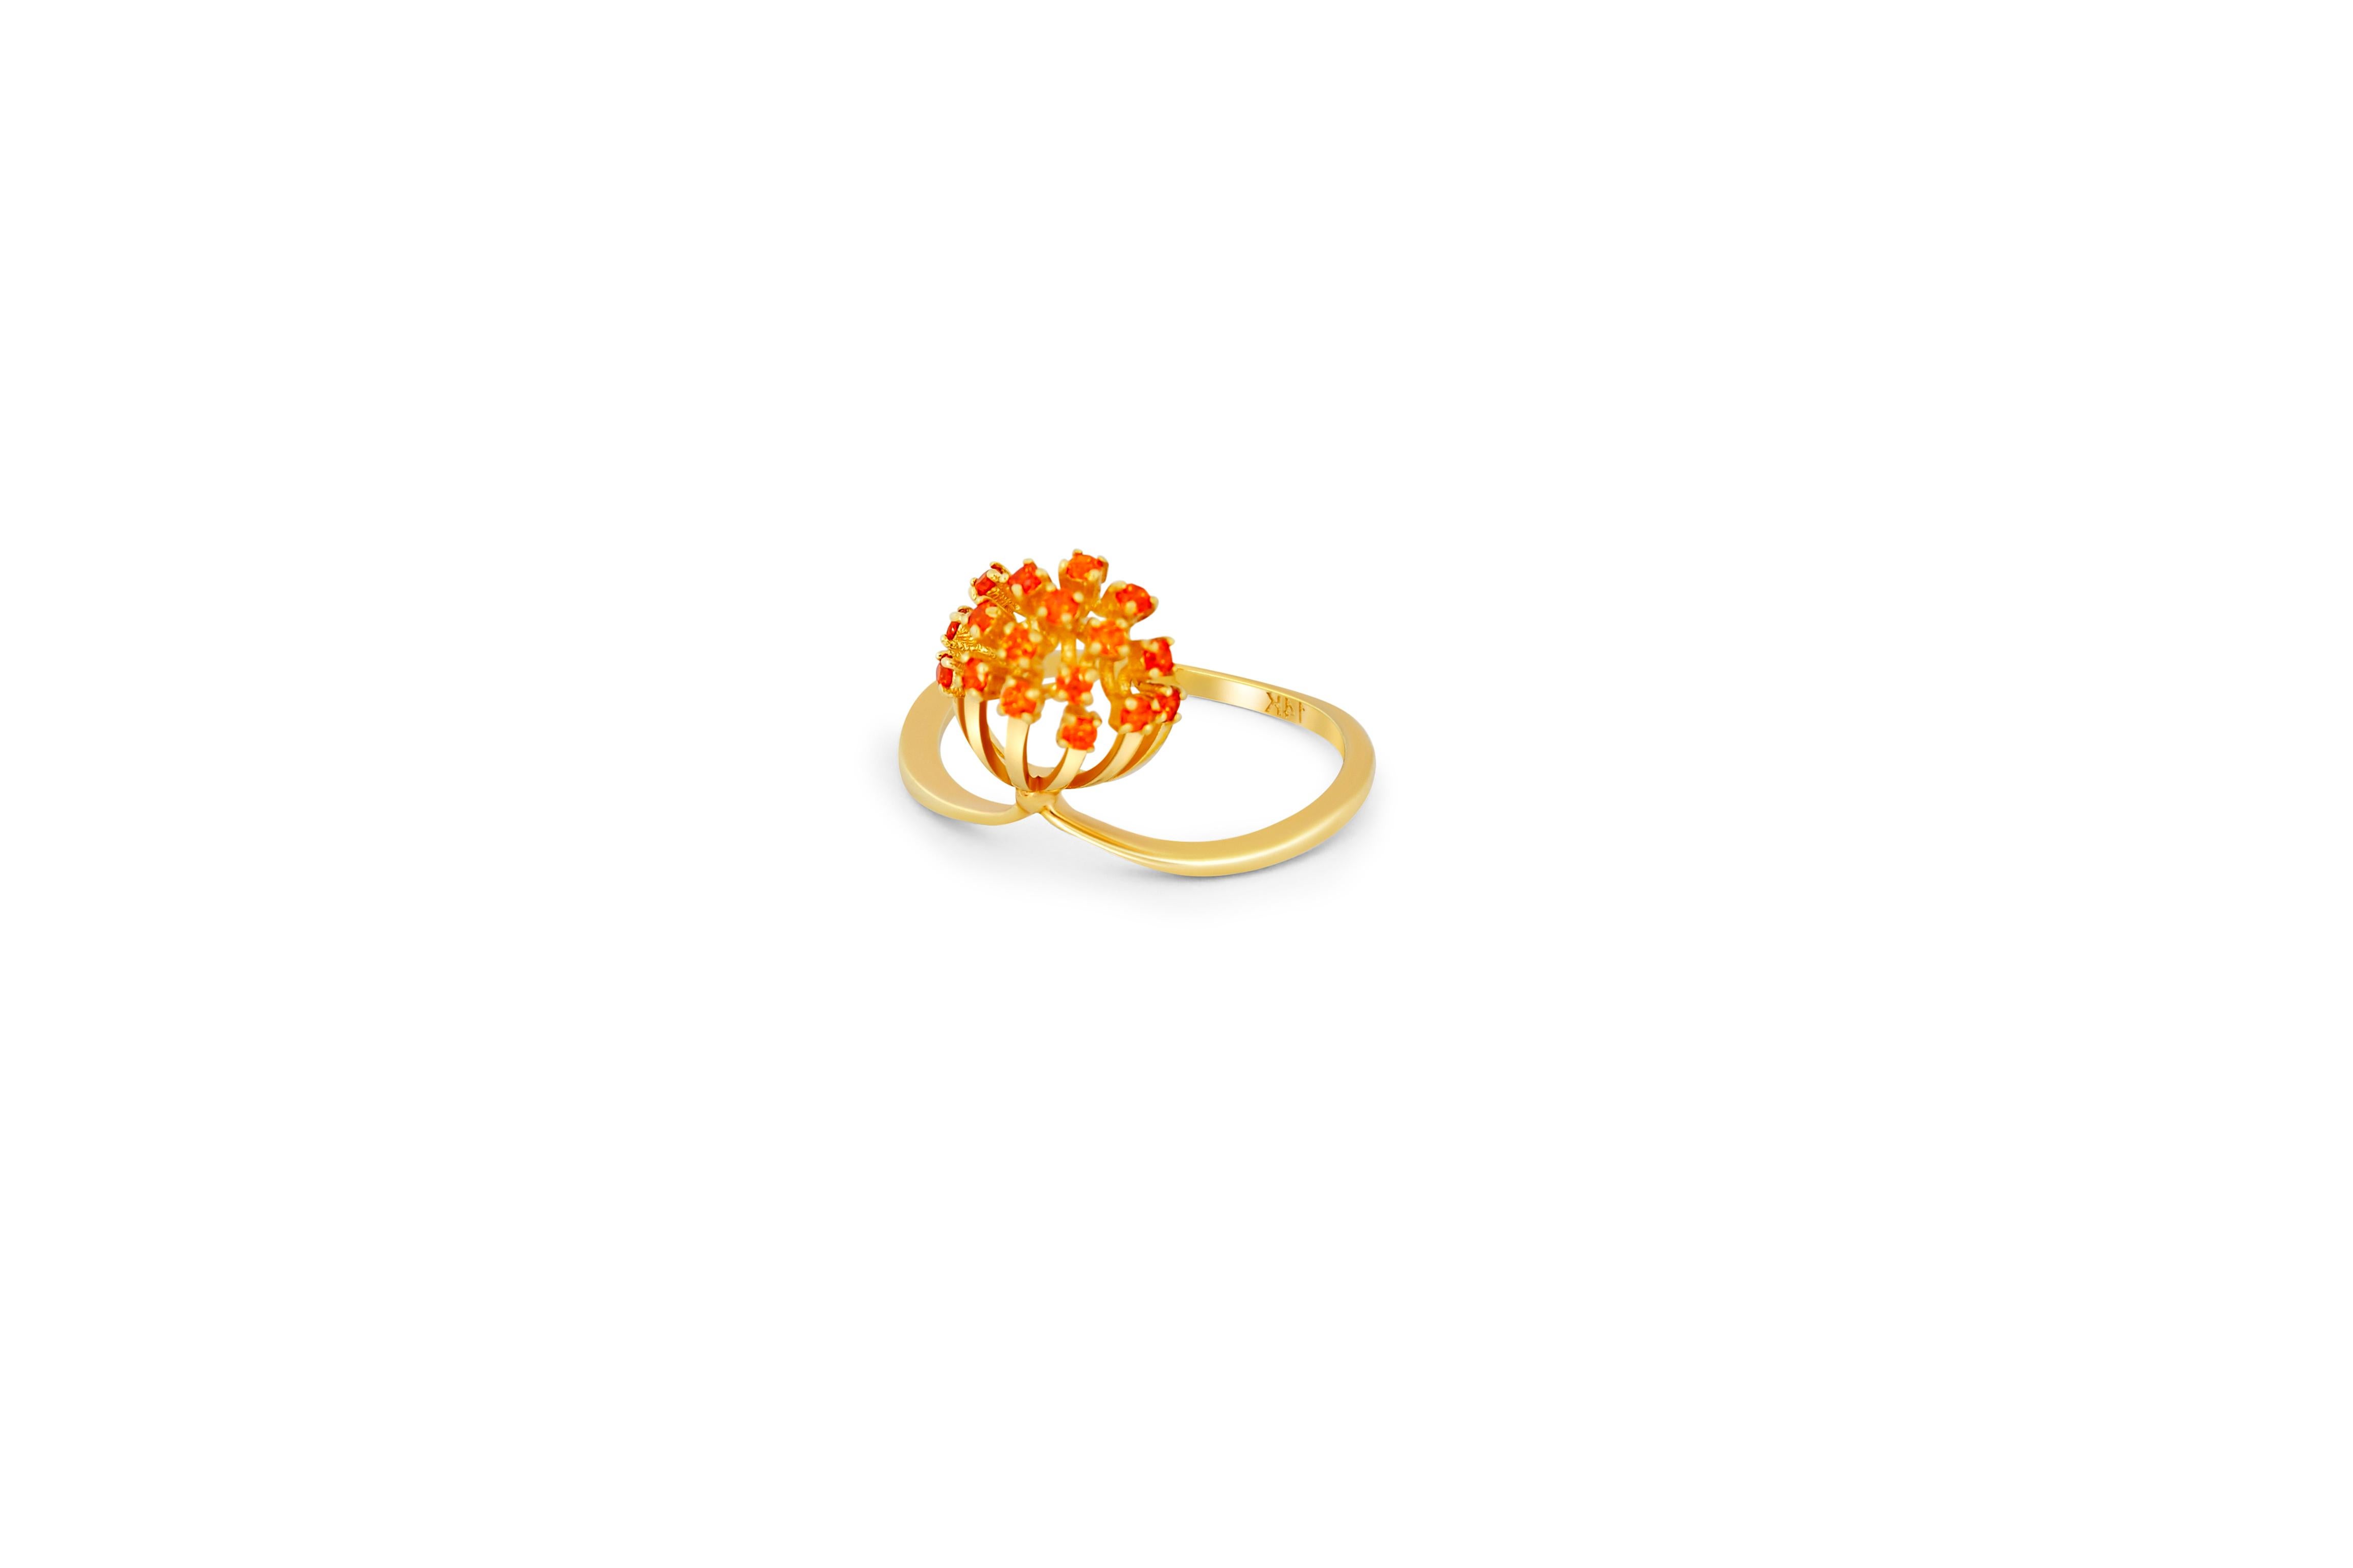 Dandelion flower ring with orange lab sapphires in 14k gold. Vintage Style  Dandelion Flower ring. Dandelion Seed Ring. Lucky, wish gold ring. Wildflower Ring.

Metal: 14k gold
Weight: 2.3 gr depends from size
Gemstones:
Lab sapphires: orange color,